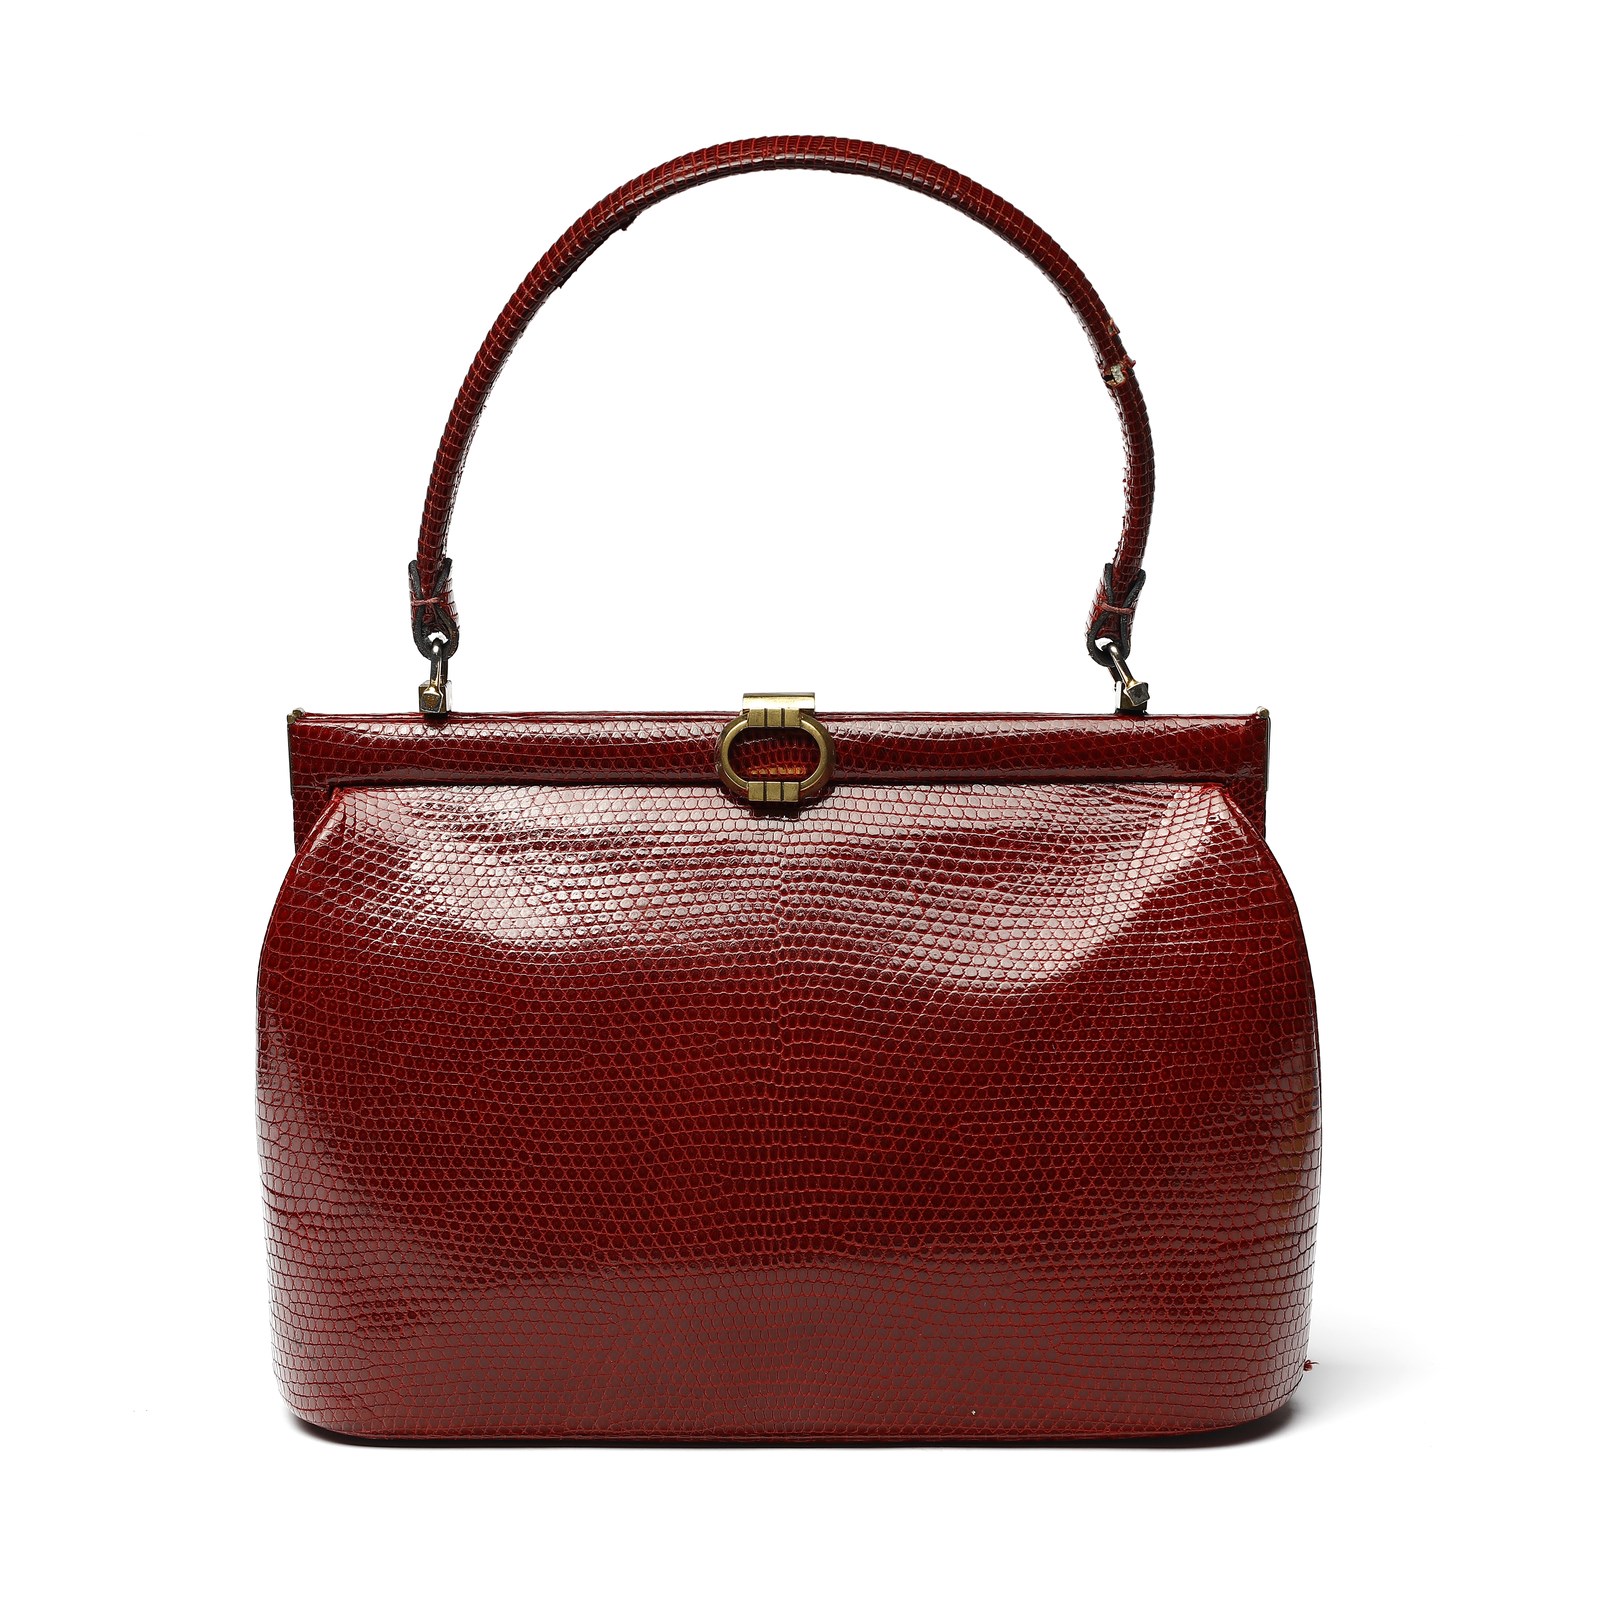 Burgundy lizard handbag. (Gucci )